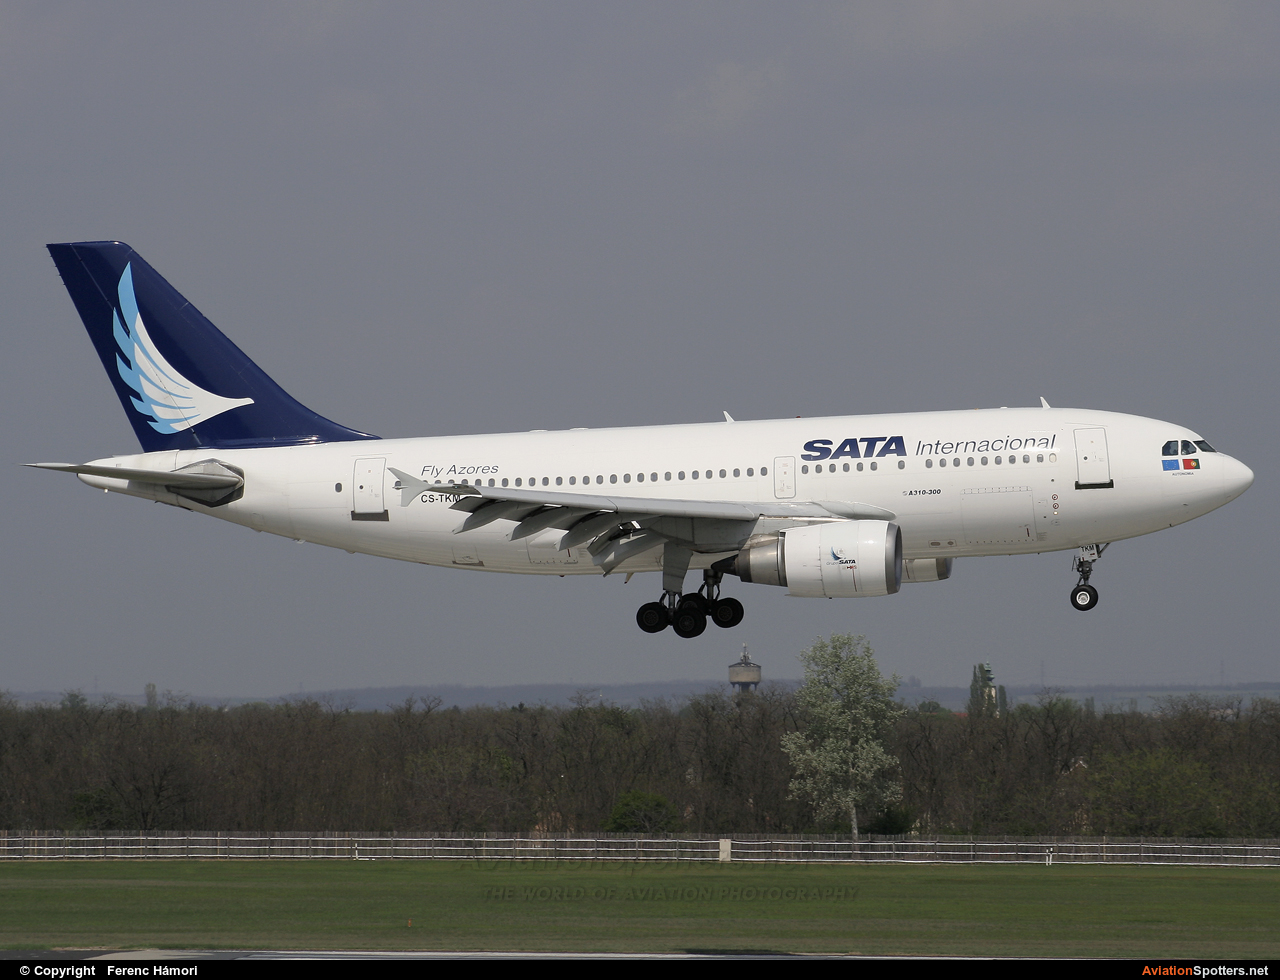 SATA International  -  A310  (CS-TKM) By Ferenc Hámori (hamori)